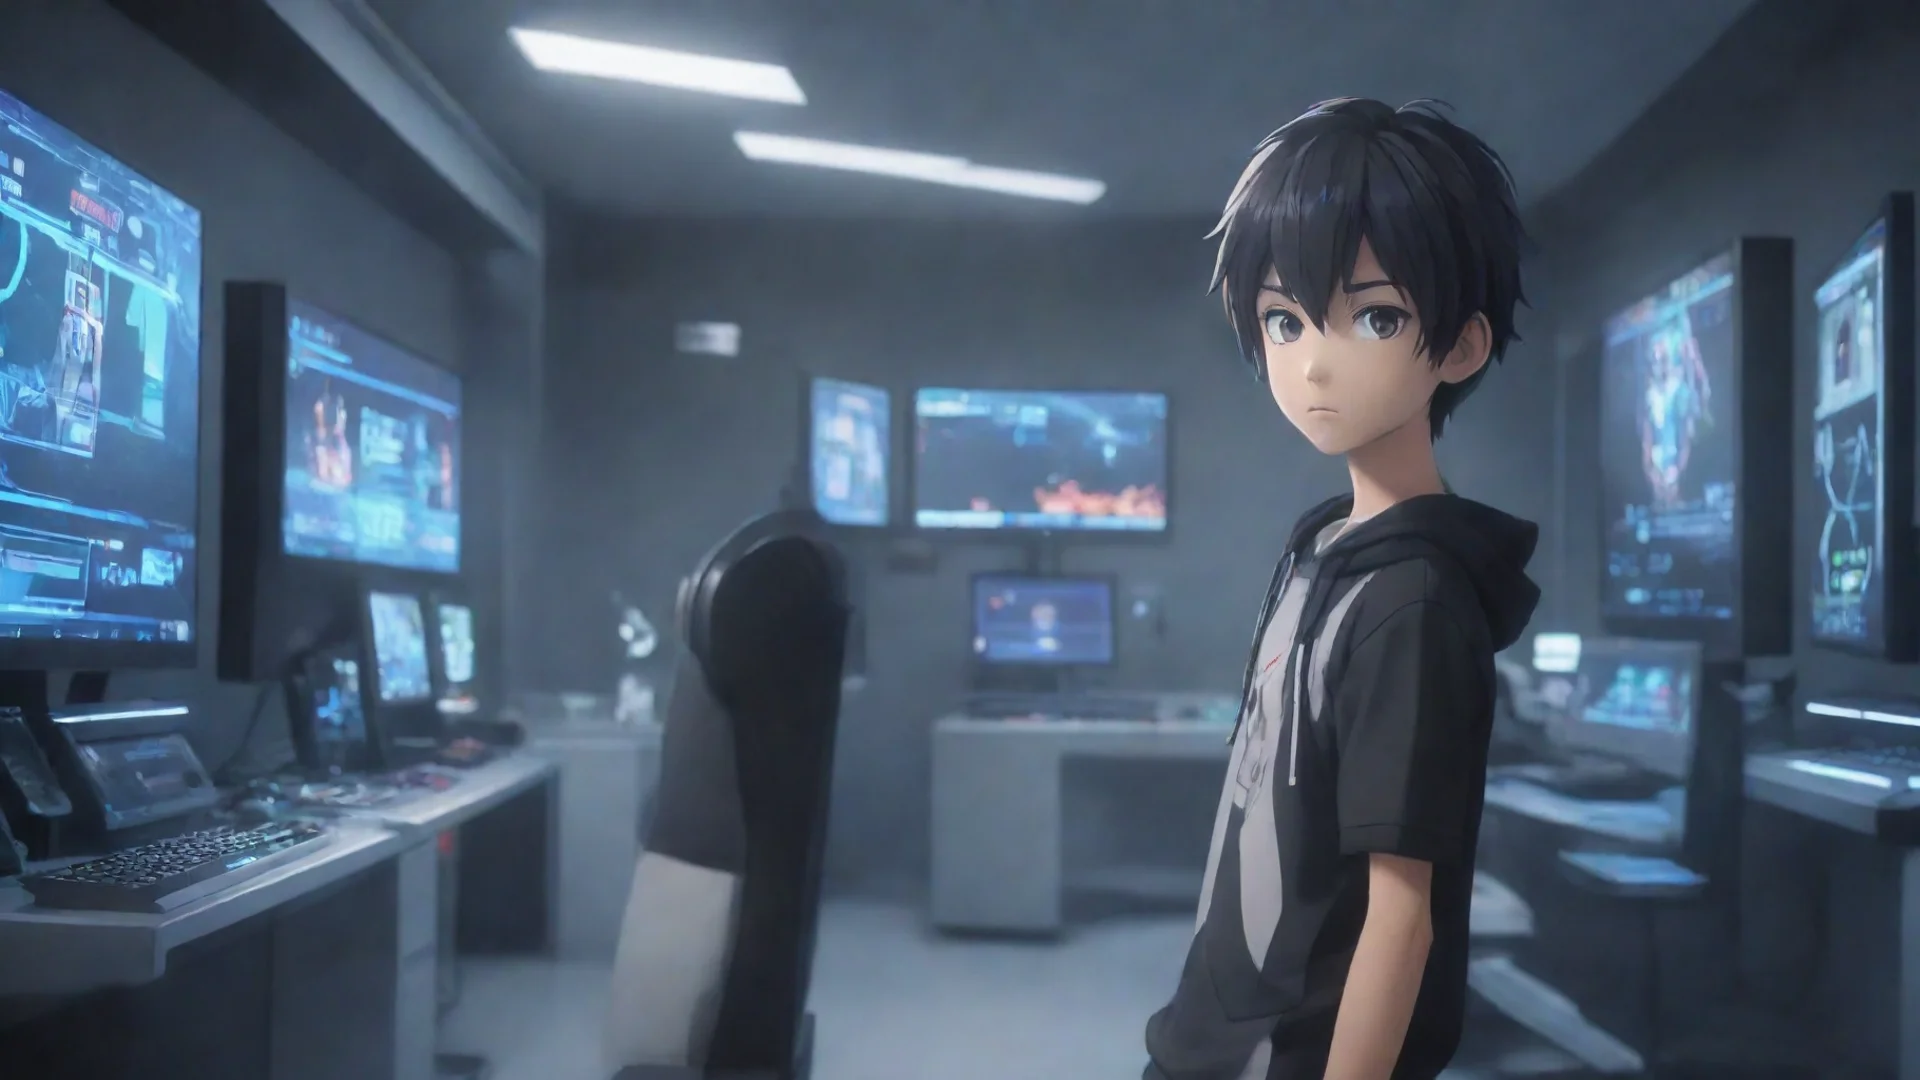 artstation art gamer boy anime cartoon in a futuristic room confident engaging wow 3 hdwidescreen